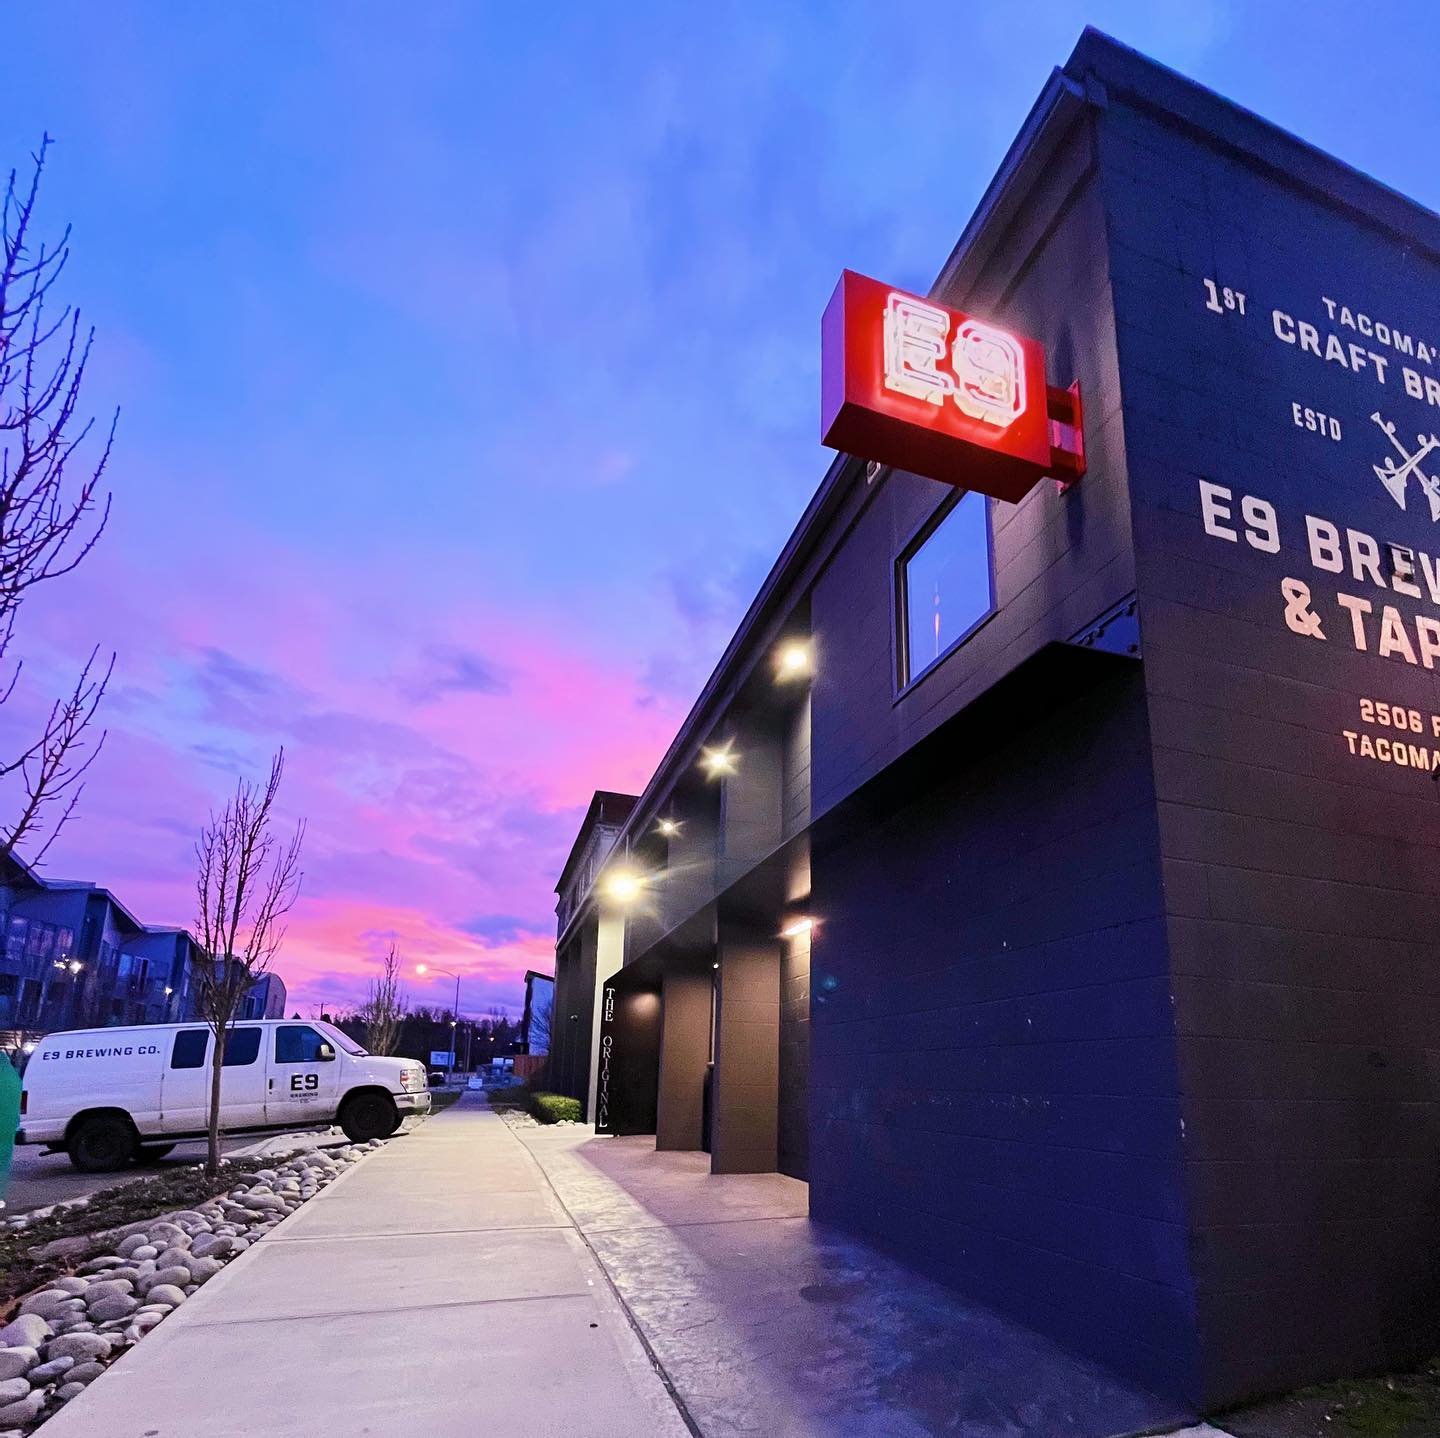 E9 Brewing Company in Tacoma, WA - Image provided by E9 Brewing Co.